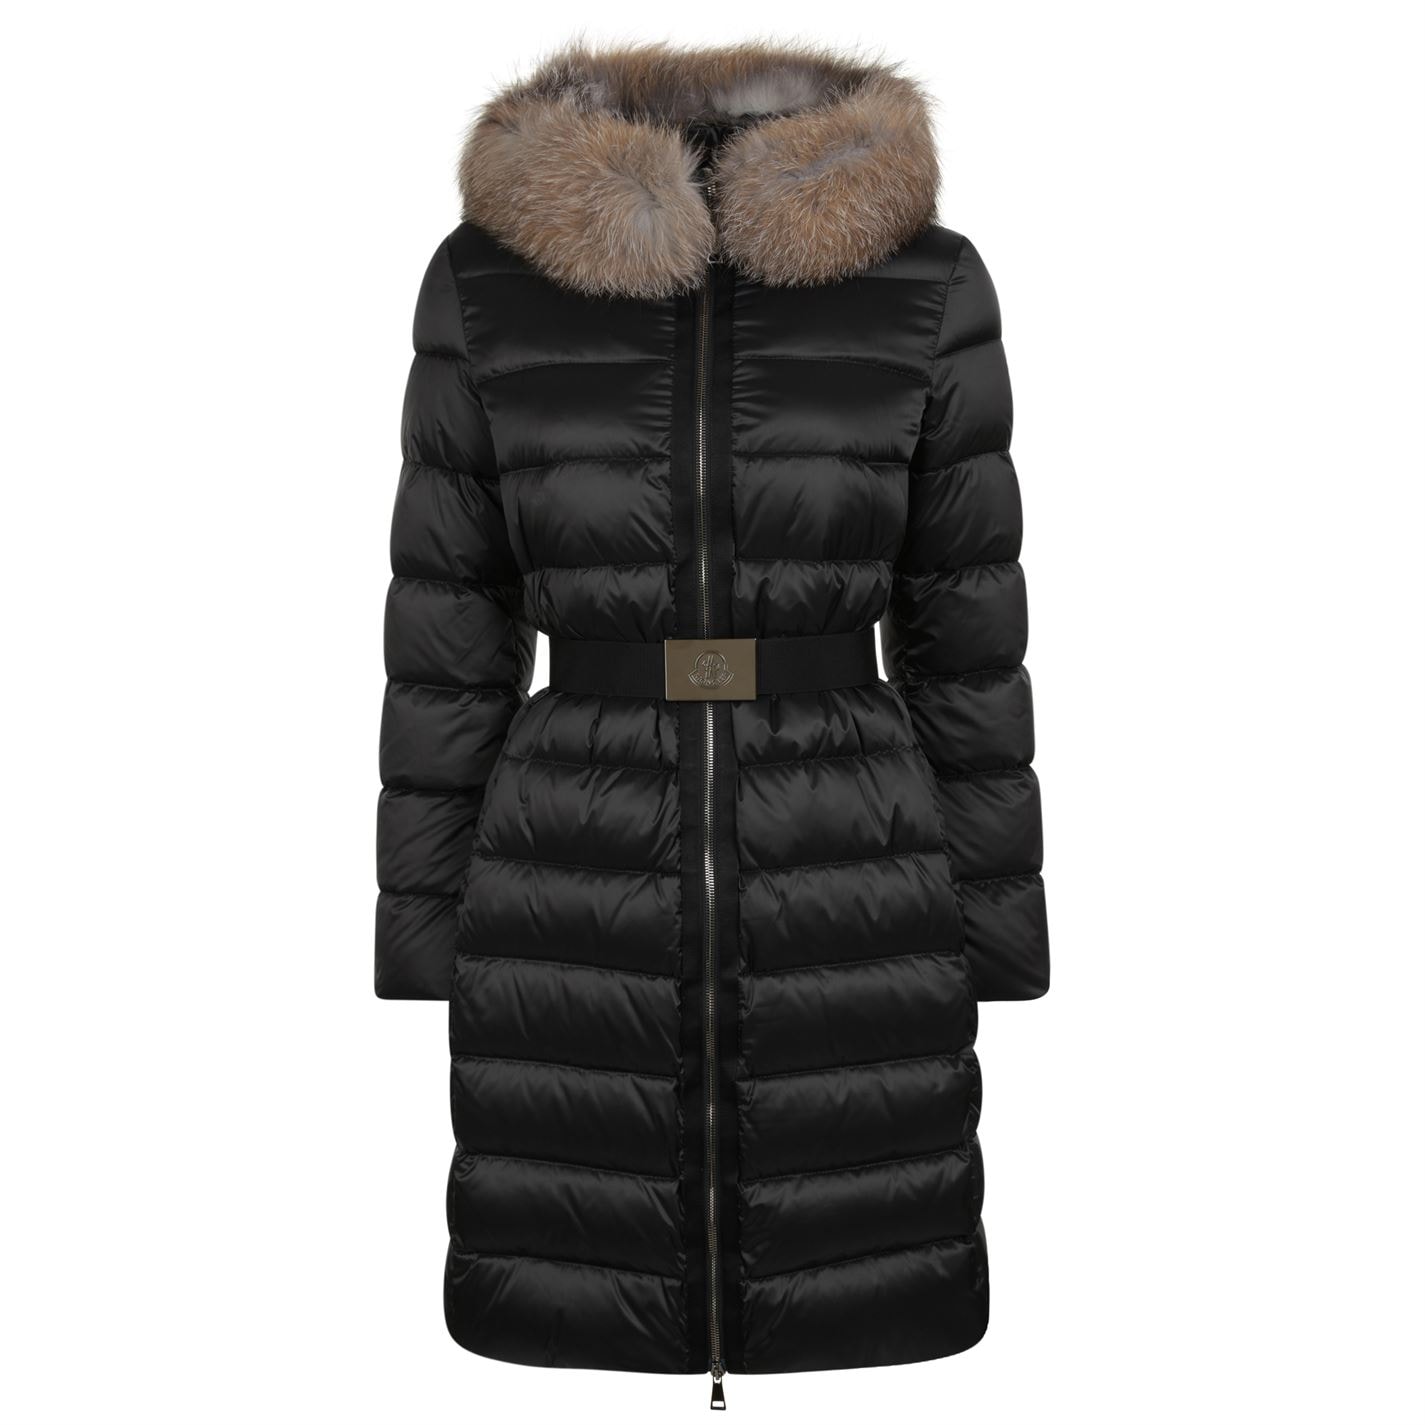 moncler Tinuviel Parka Jacket BLACK – high quality cheap moncler jackets